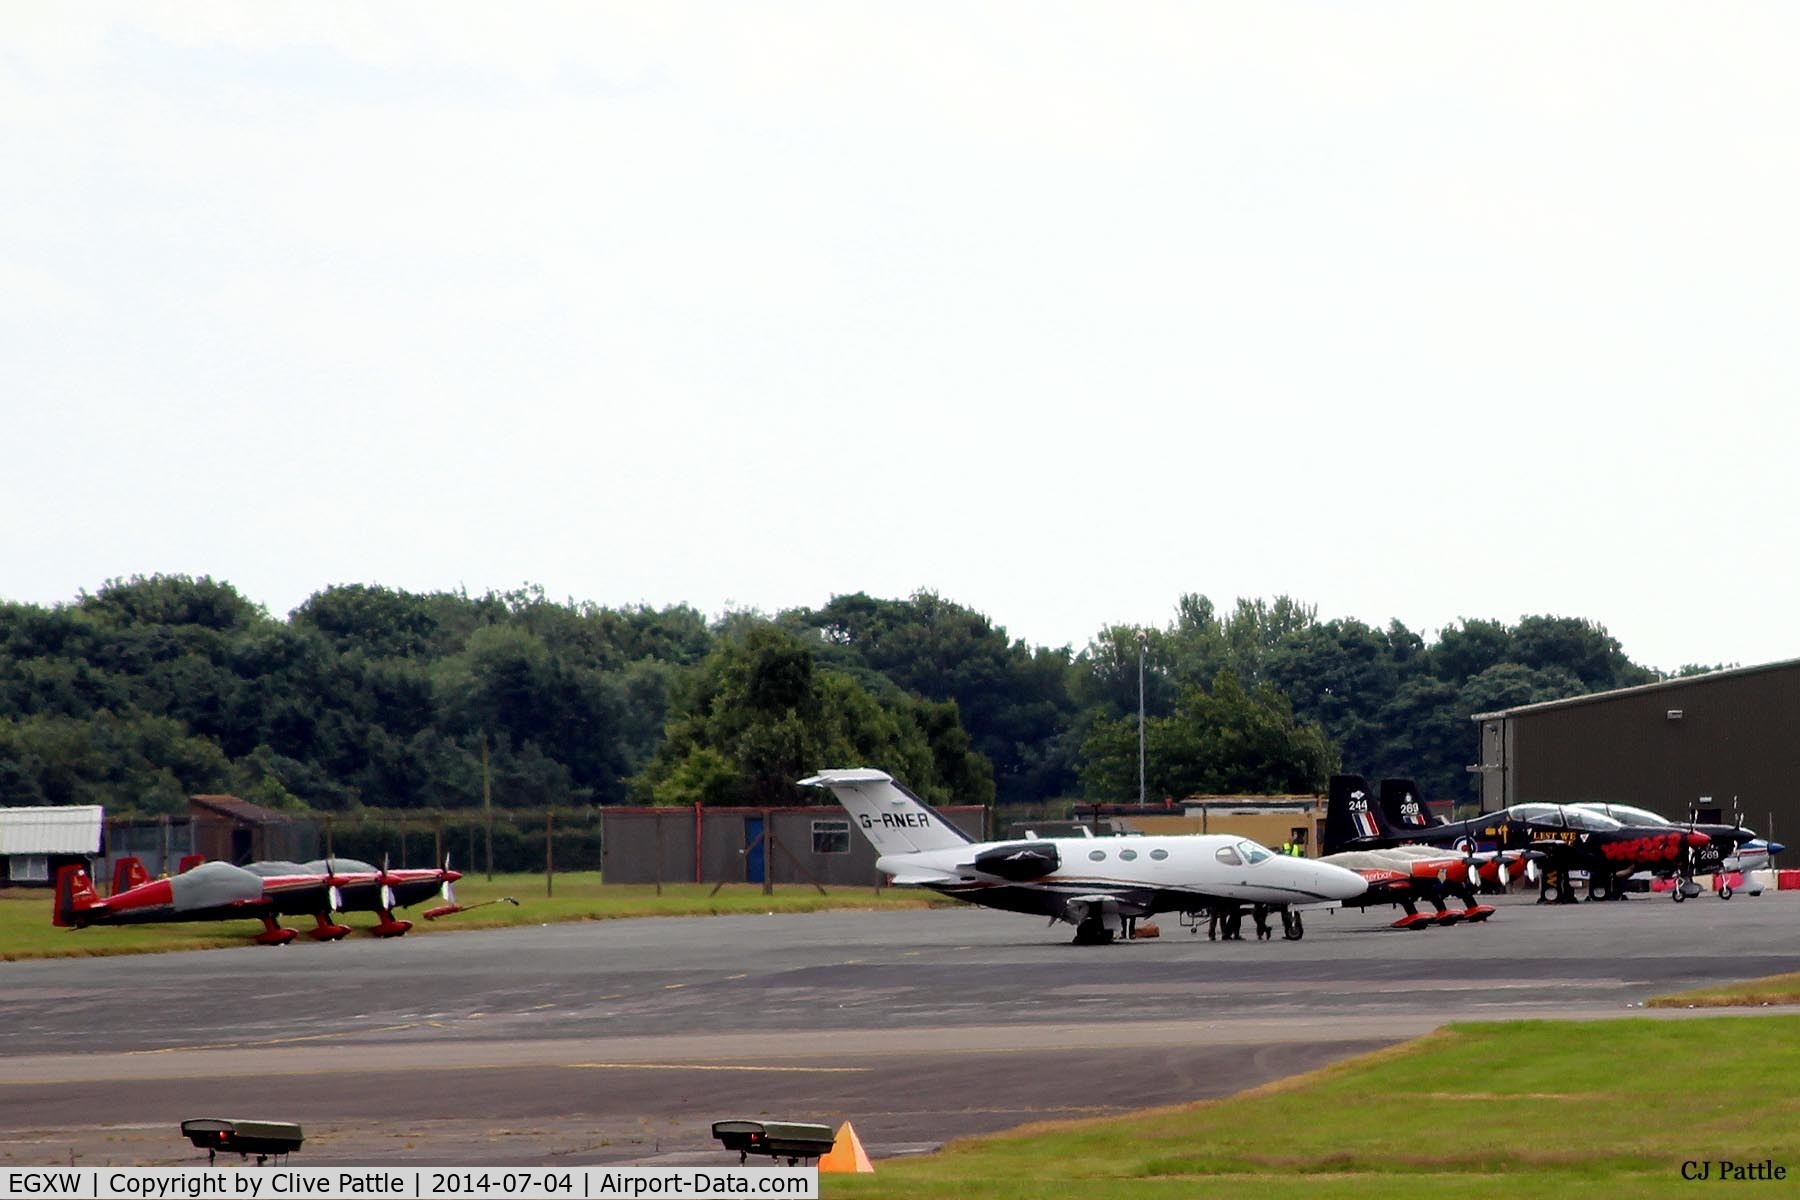 RAF Waddington Airport, Waddington, England United Kingdom (EGXW) - Visiting aircraft parked up for Waddo Airshow 14